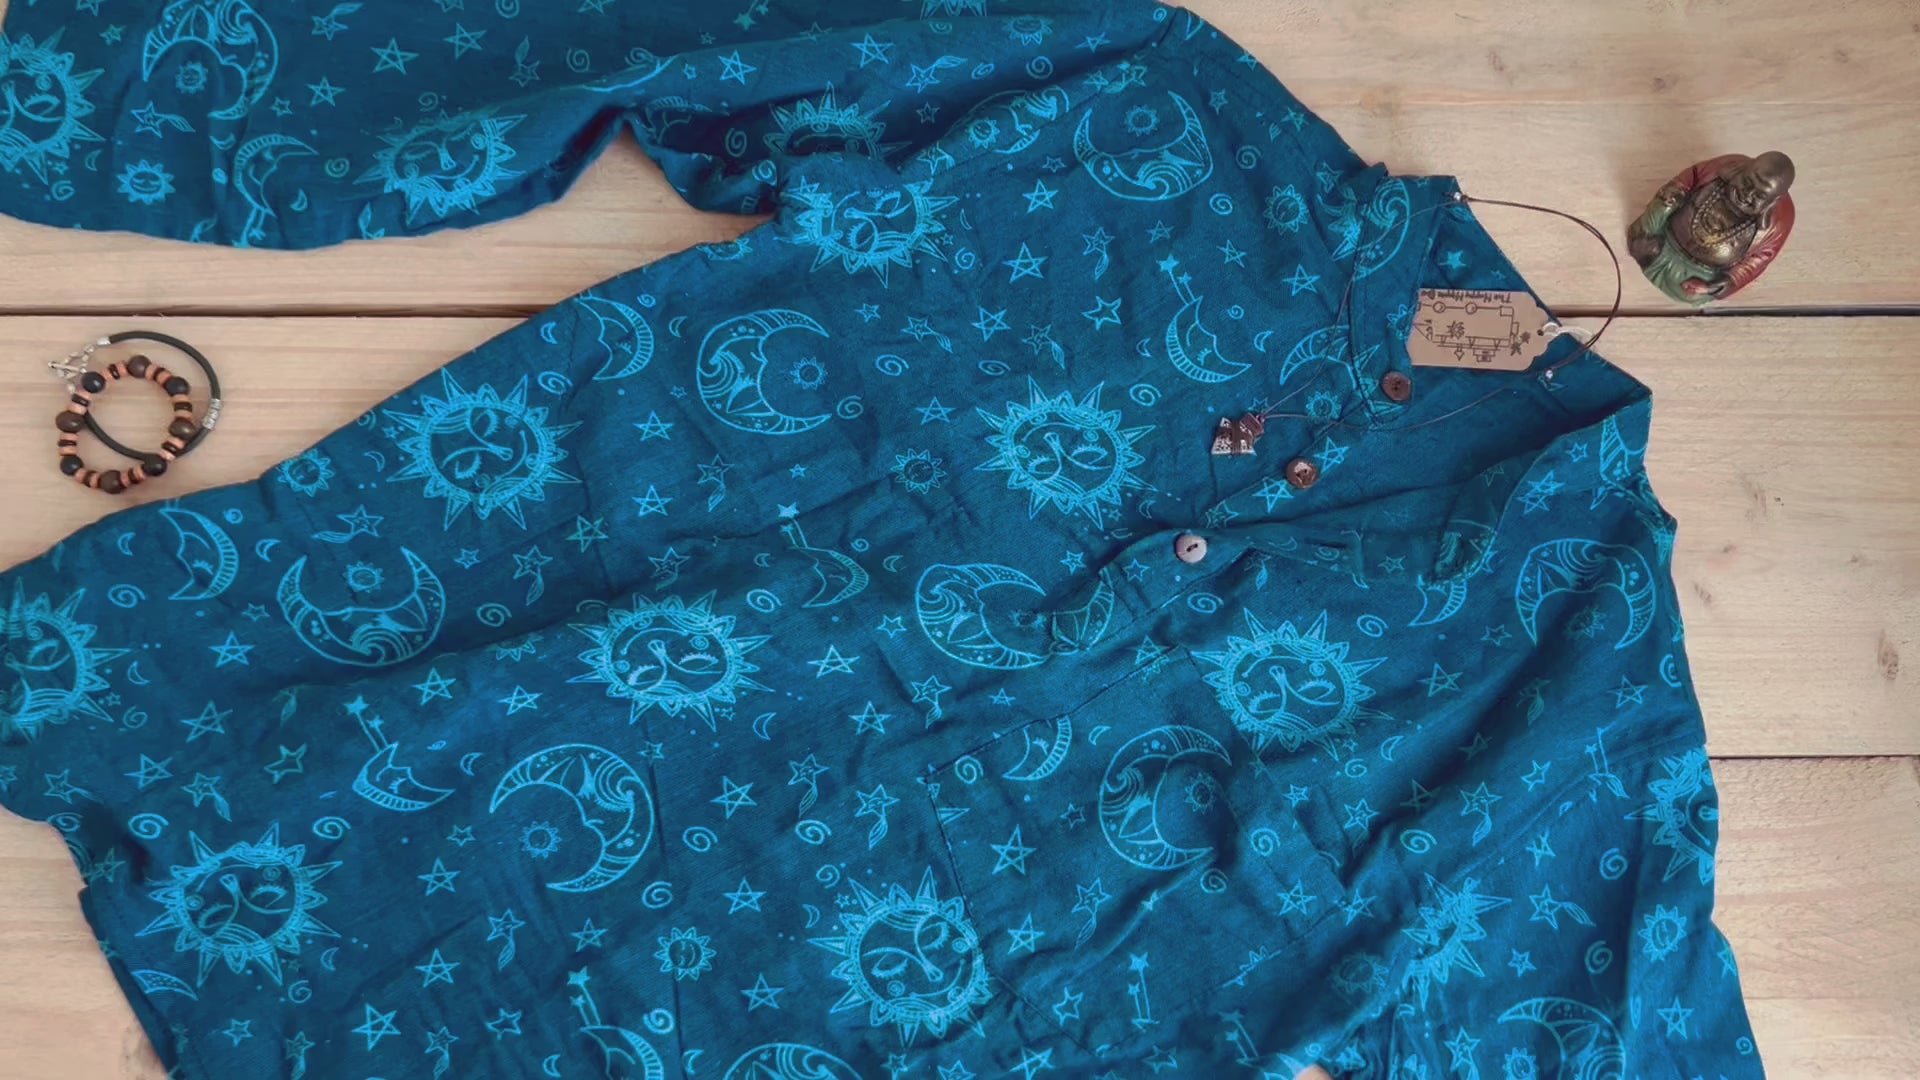 Blue moon sun celestial grandad collar button shirt Handmade fair trade ethically sourced ethical clothing long sleeve shirt 